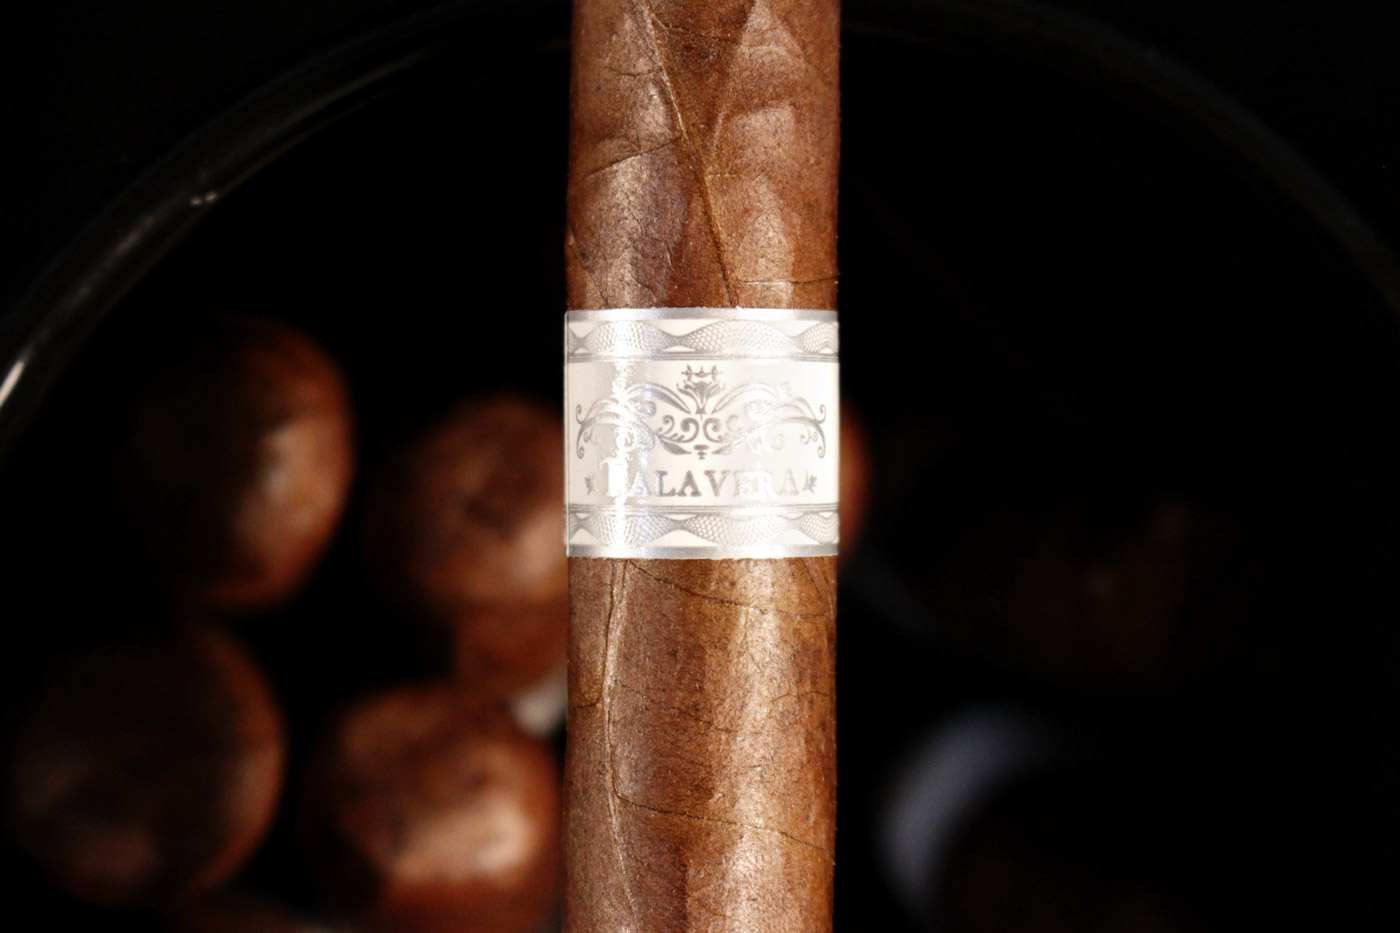 Talavera Edición Exclusiva 2015 cigar review